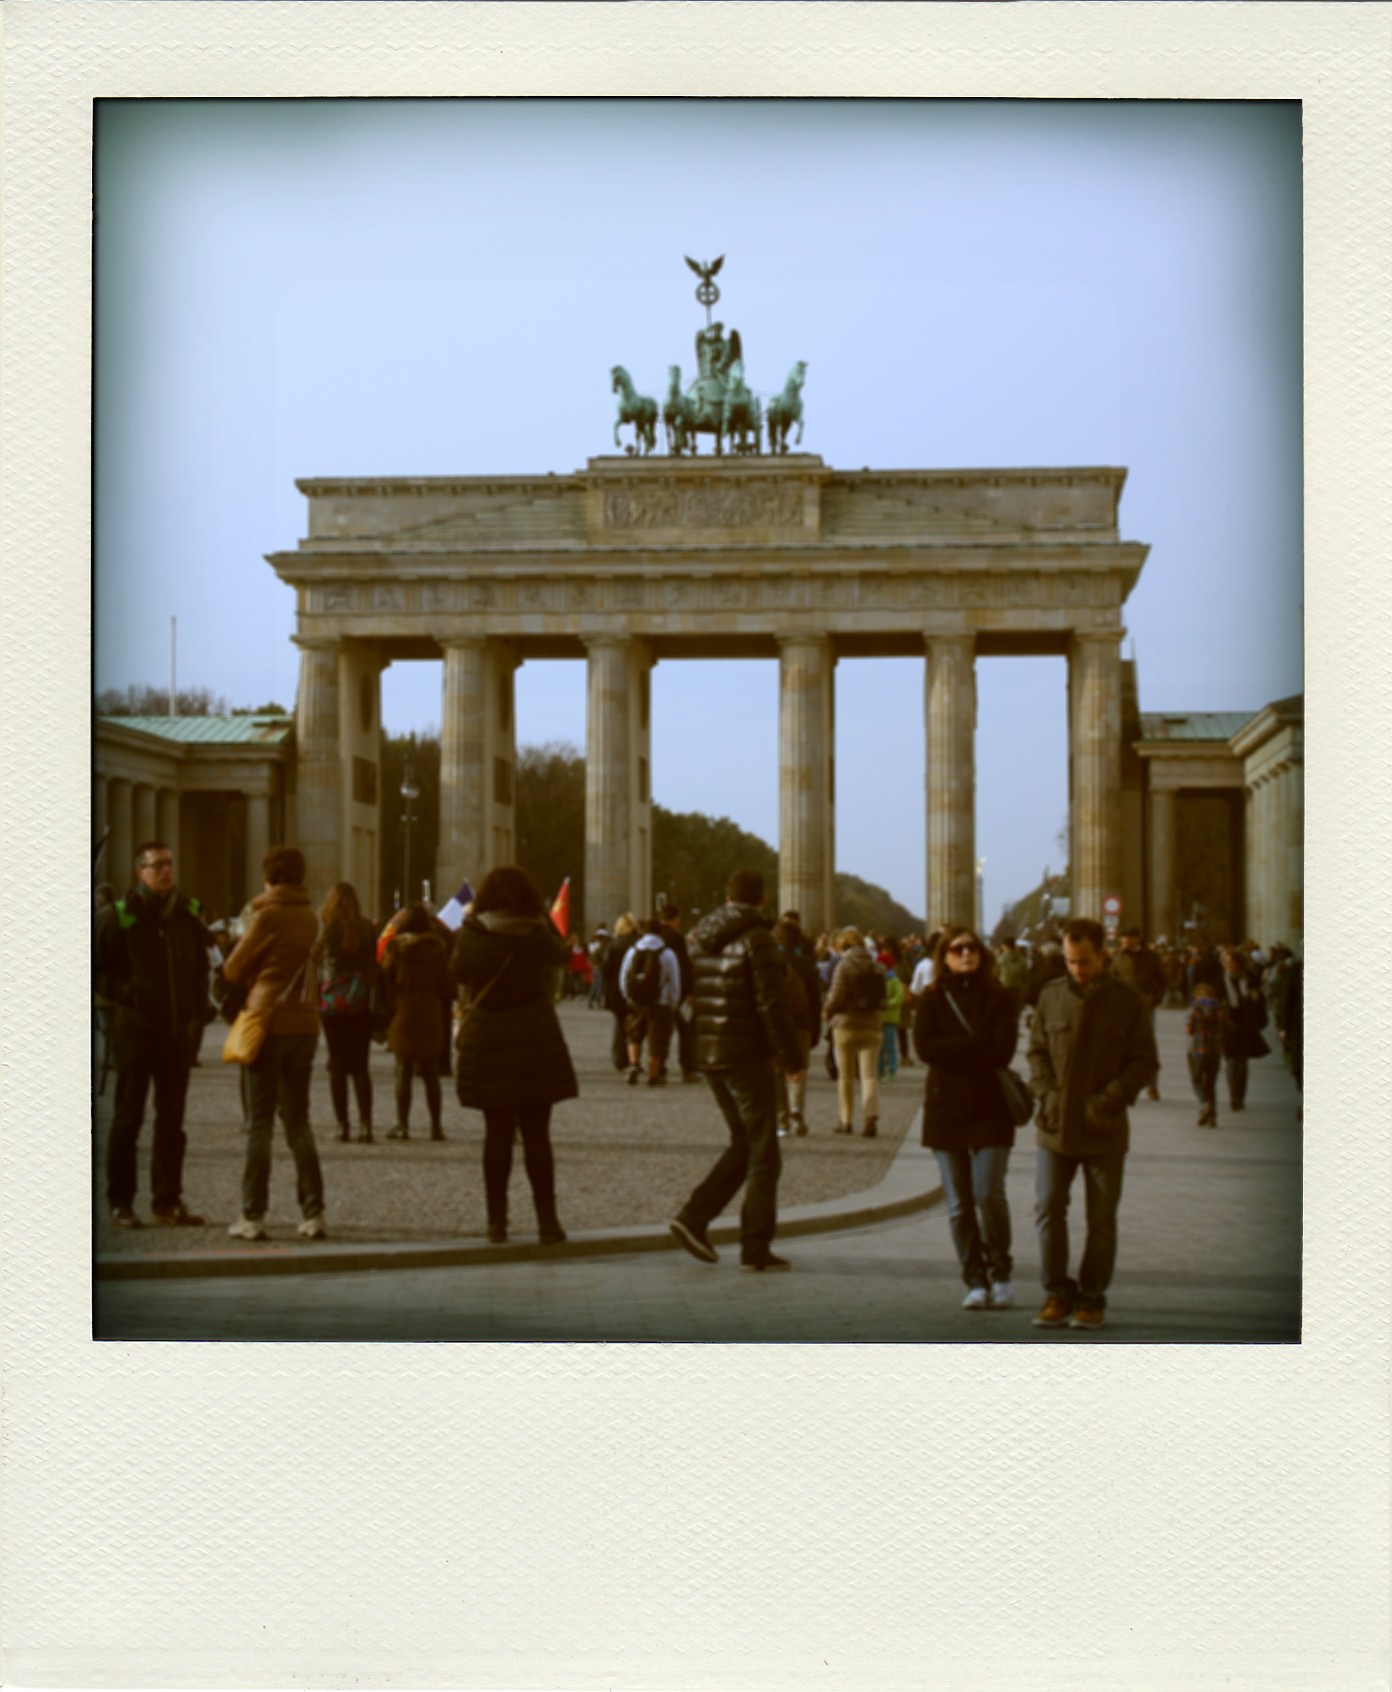 RTW Brandenburg Gate polaroid